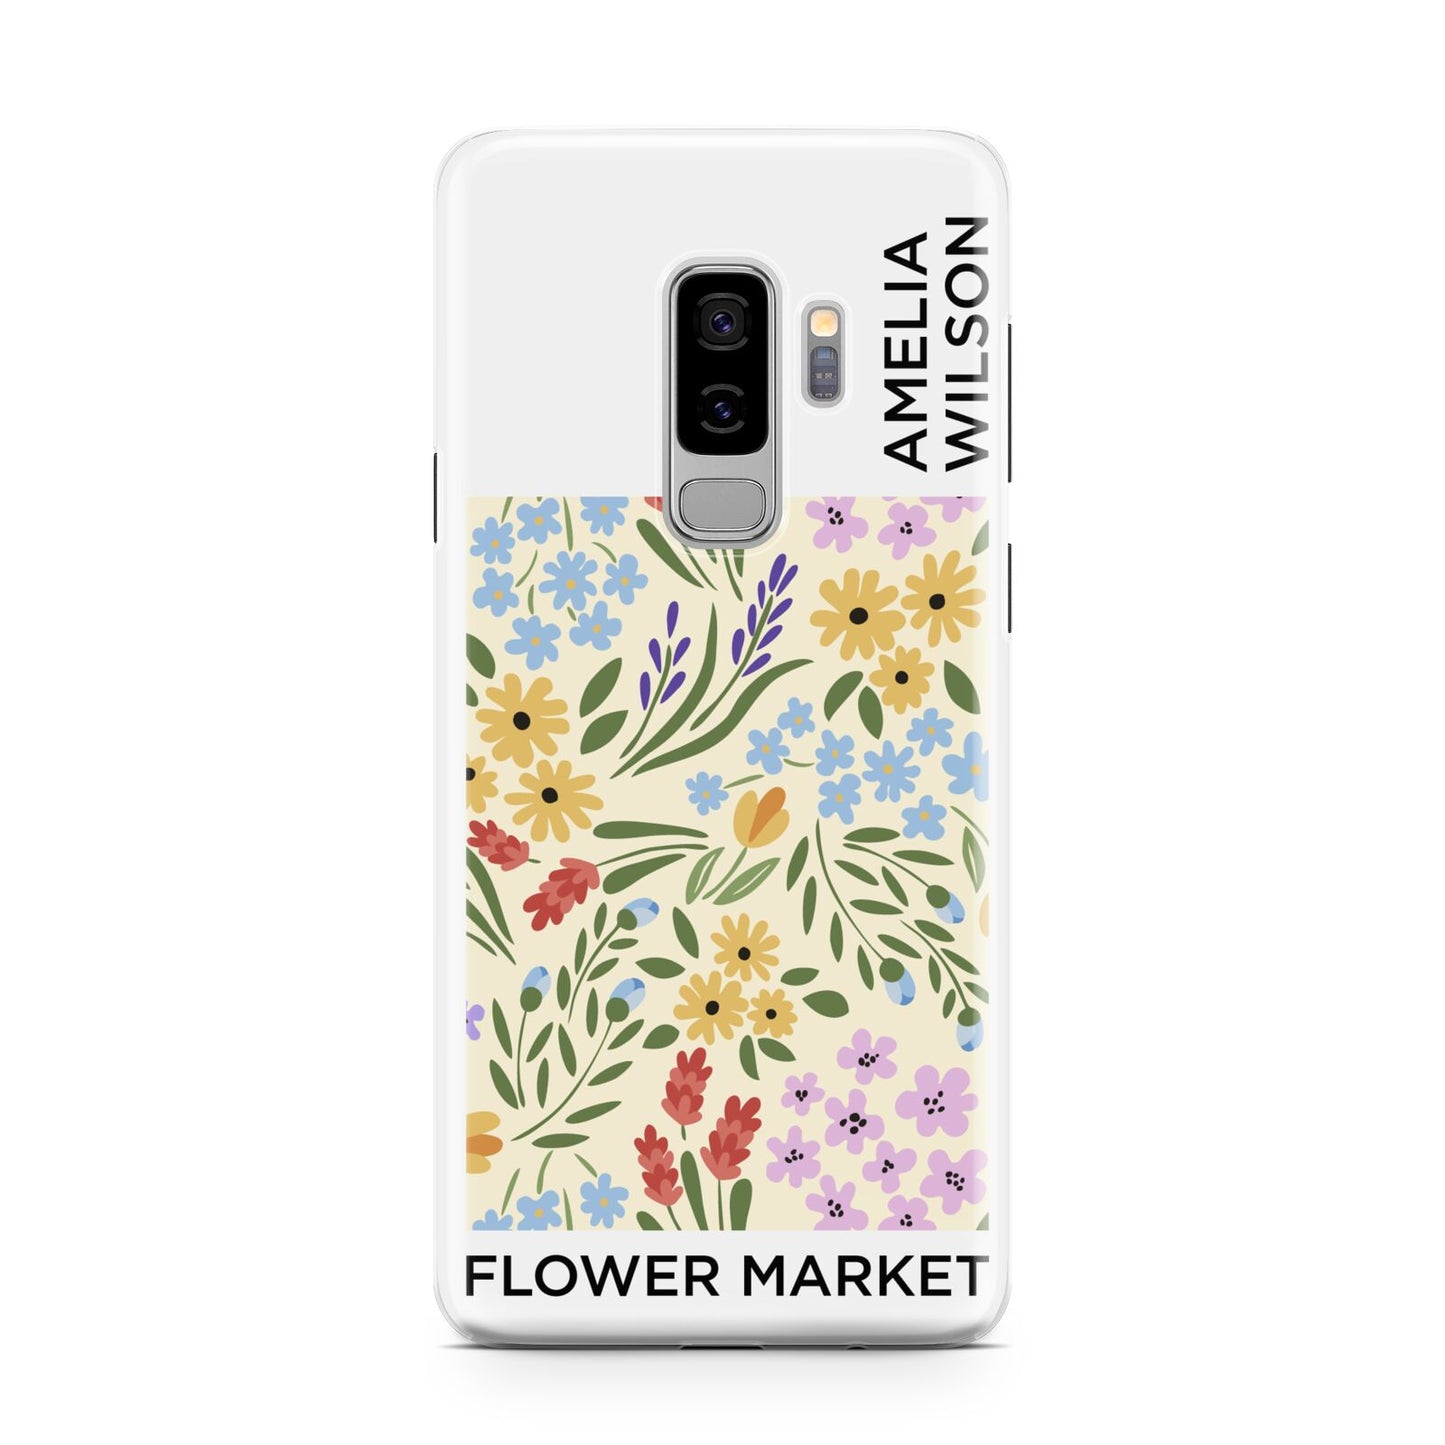 Paris Flower Market Samsung Galaxy S9 Plus Case on Silver phone